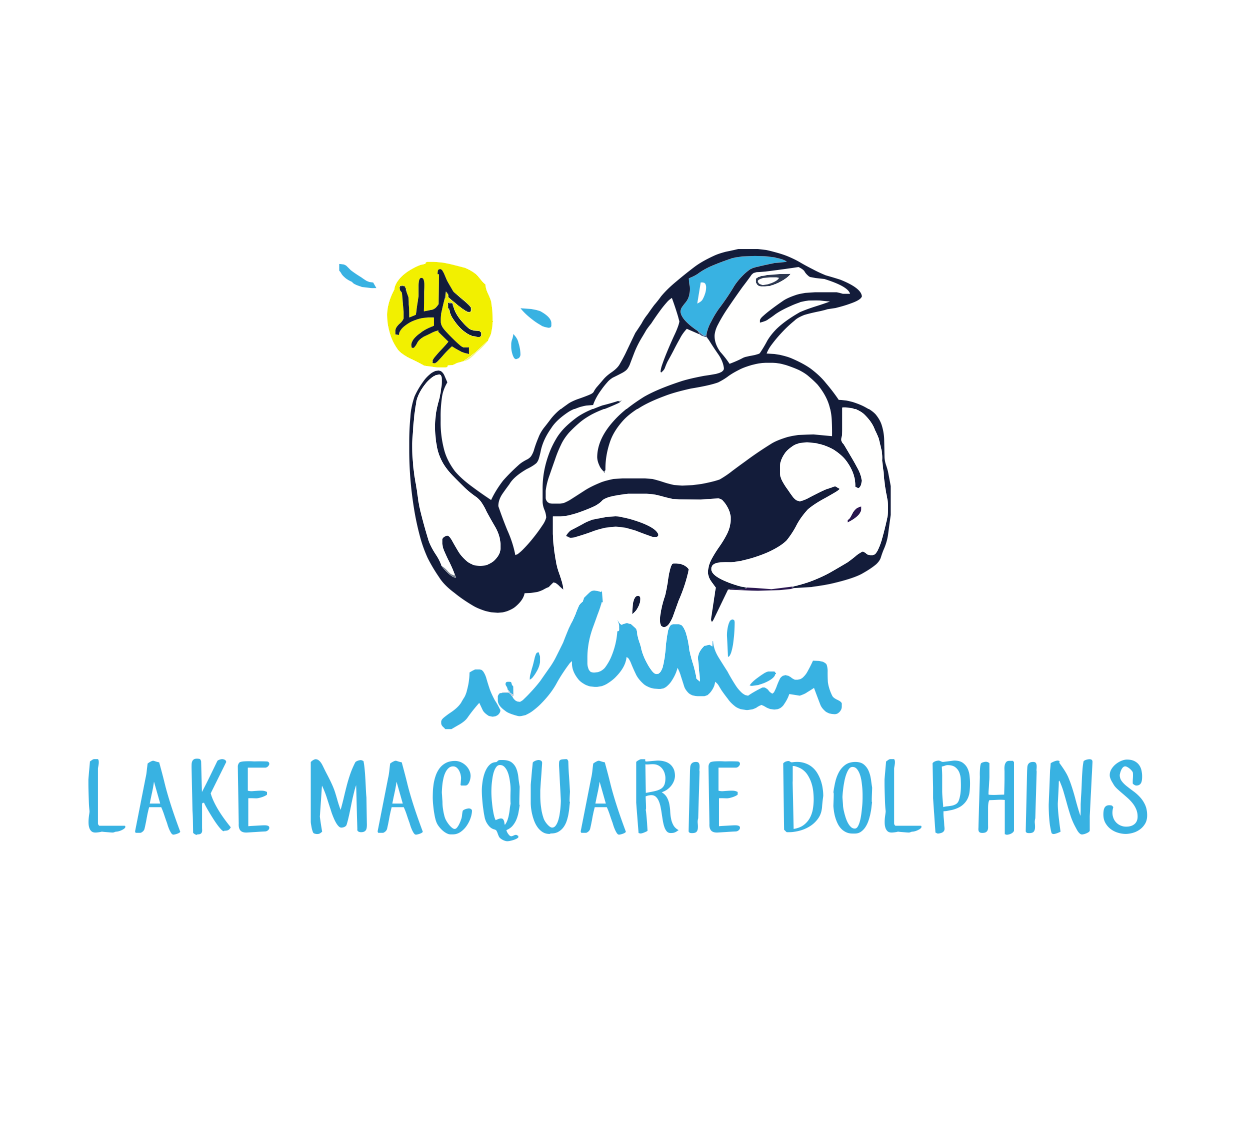 Lake Macquarie Dolphins